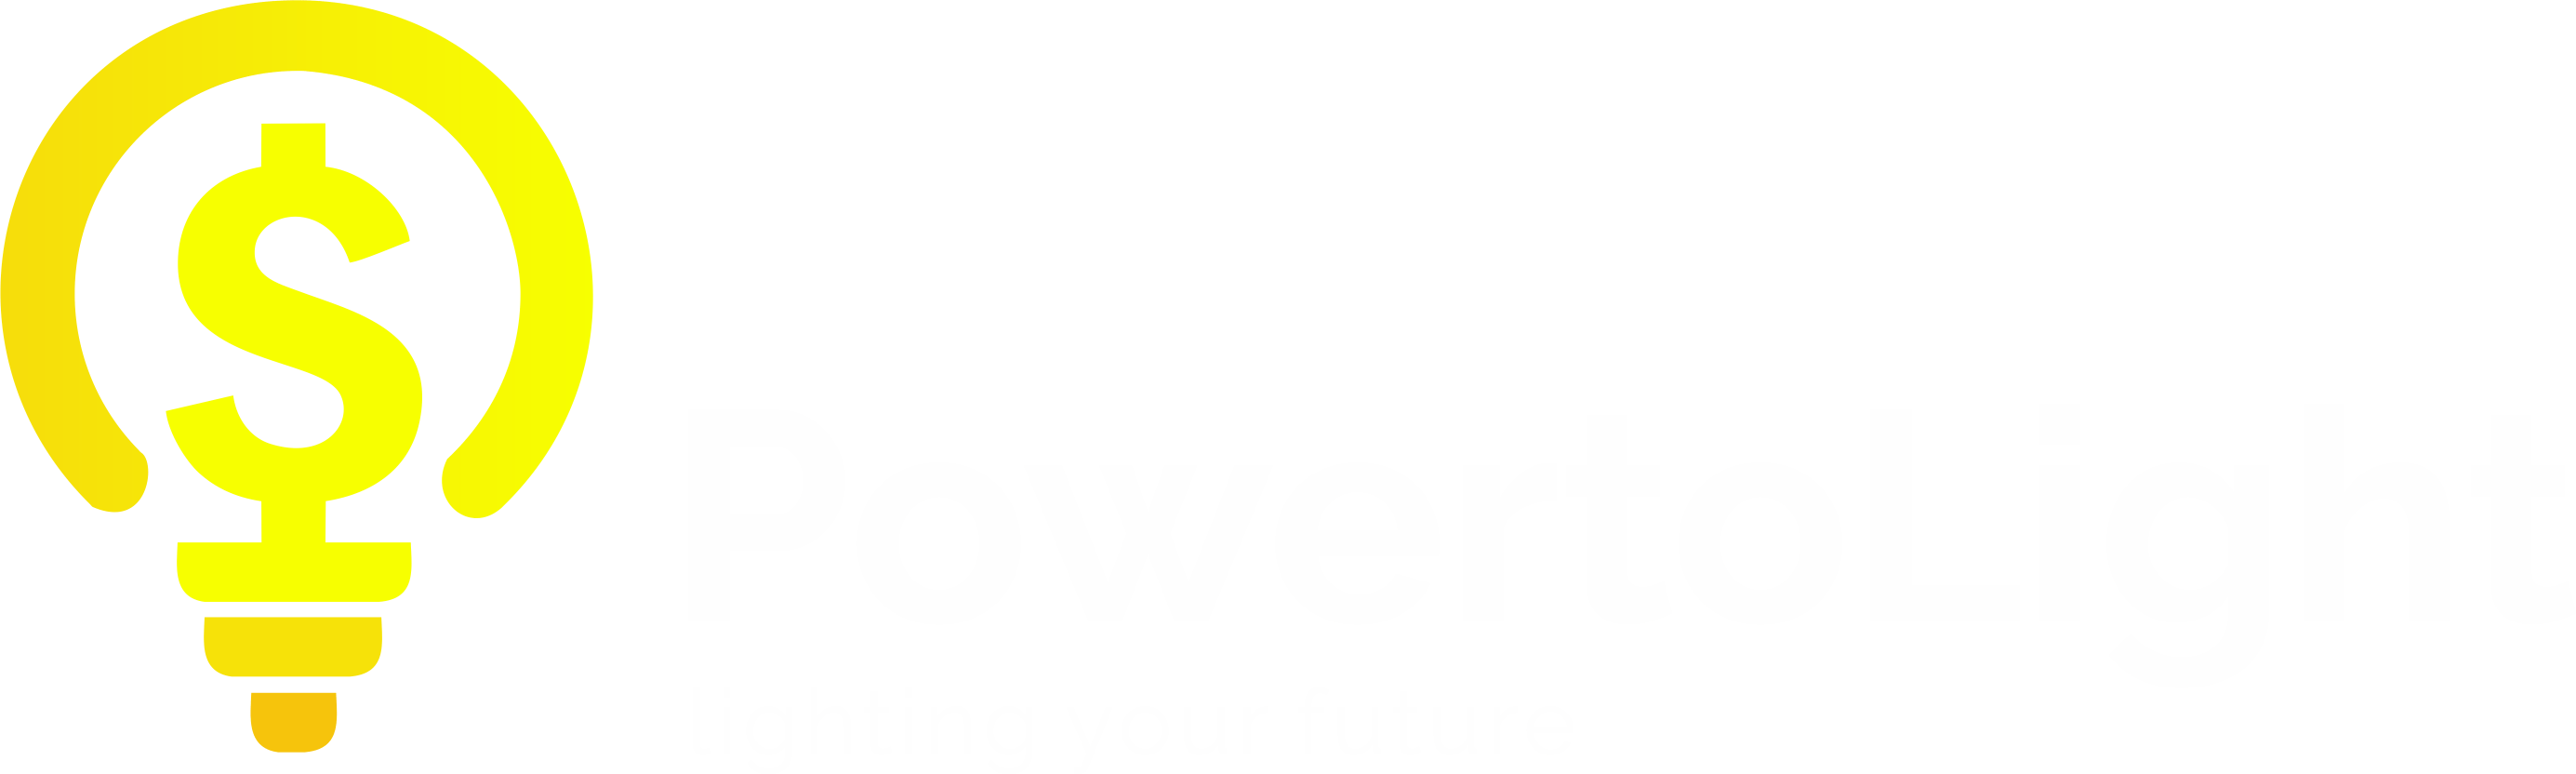 Powertolight logo